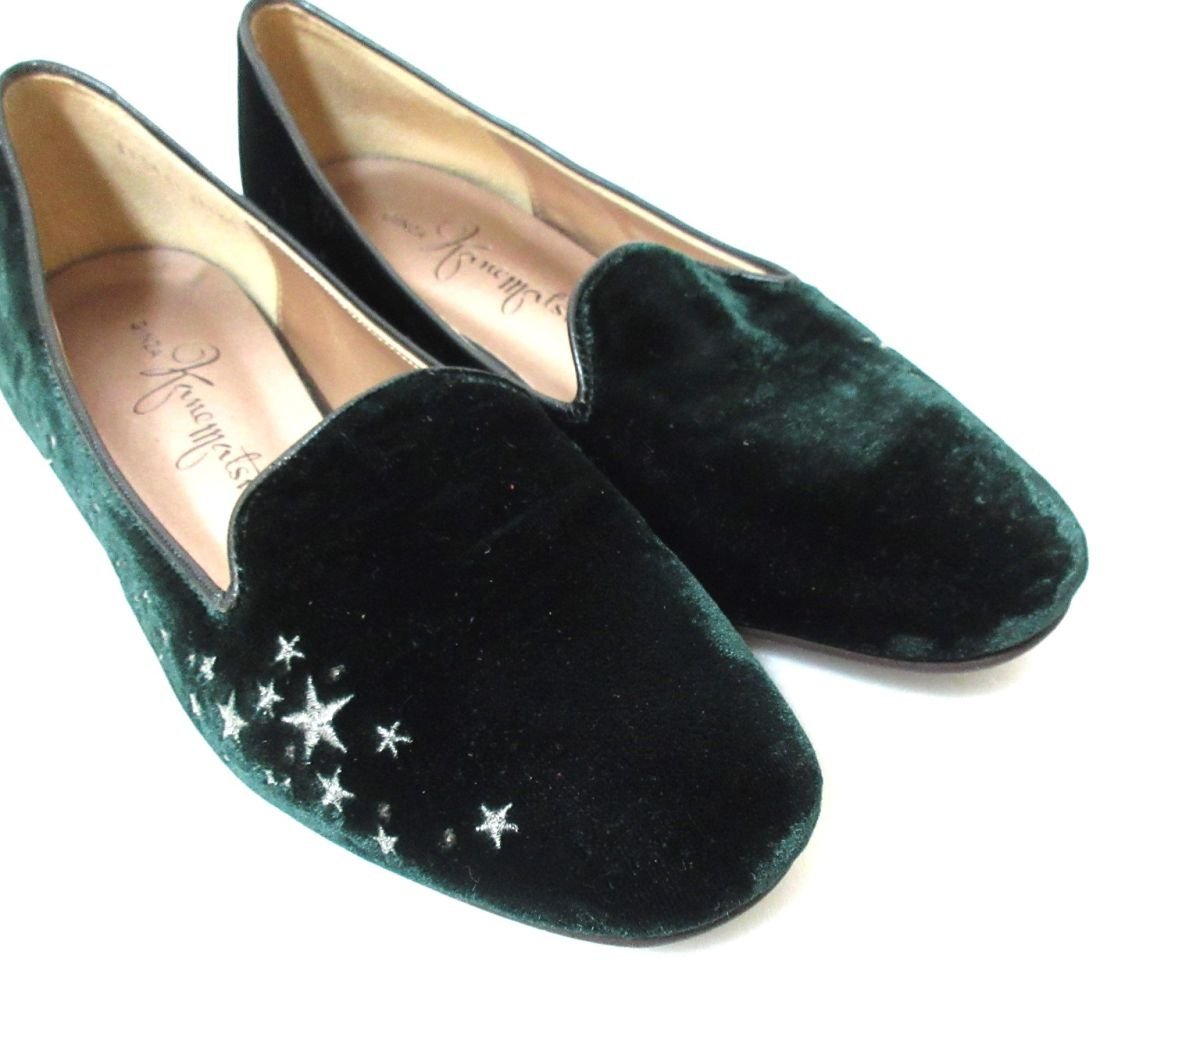  as good as new GINZA Kanematsu Ginza Kanematsu Star star pattern opera shoes flat shoes 21.5cm D green 122